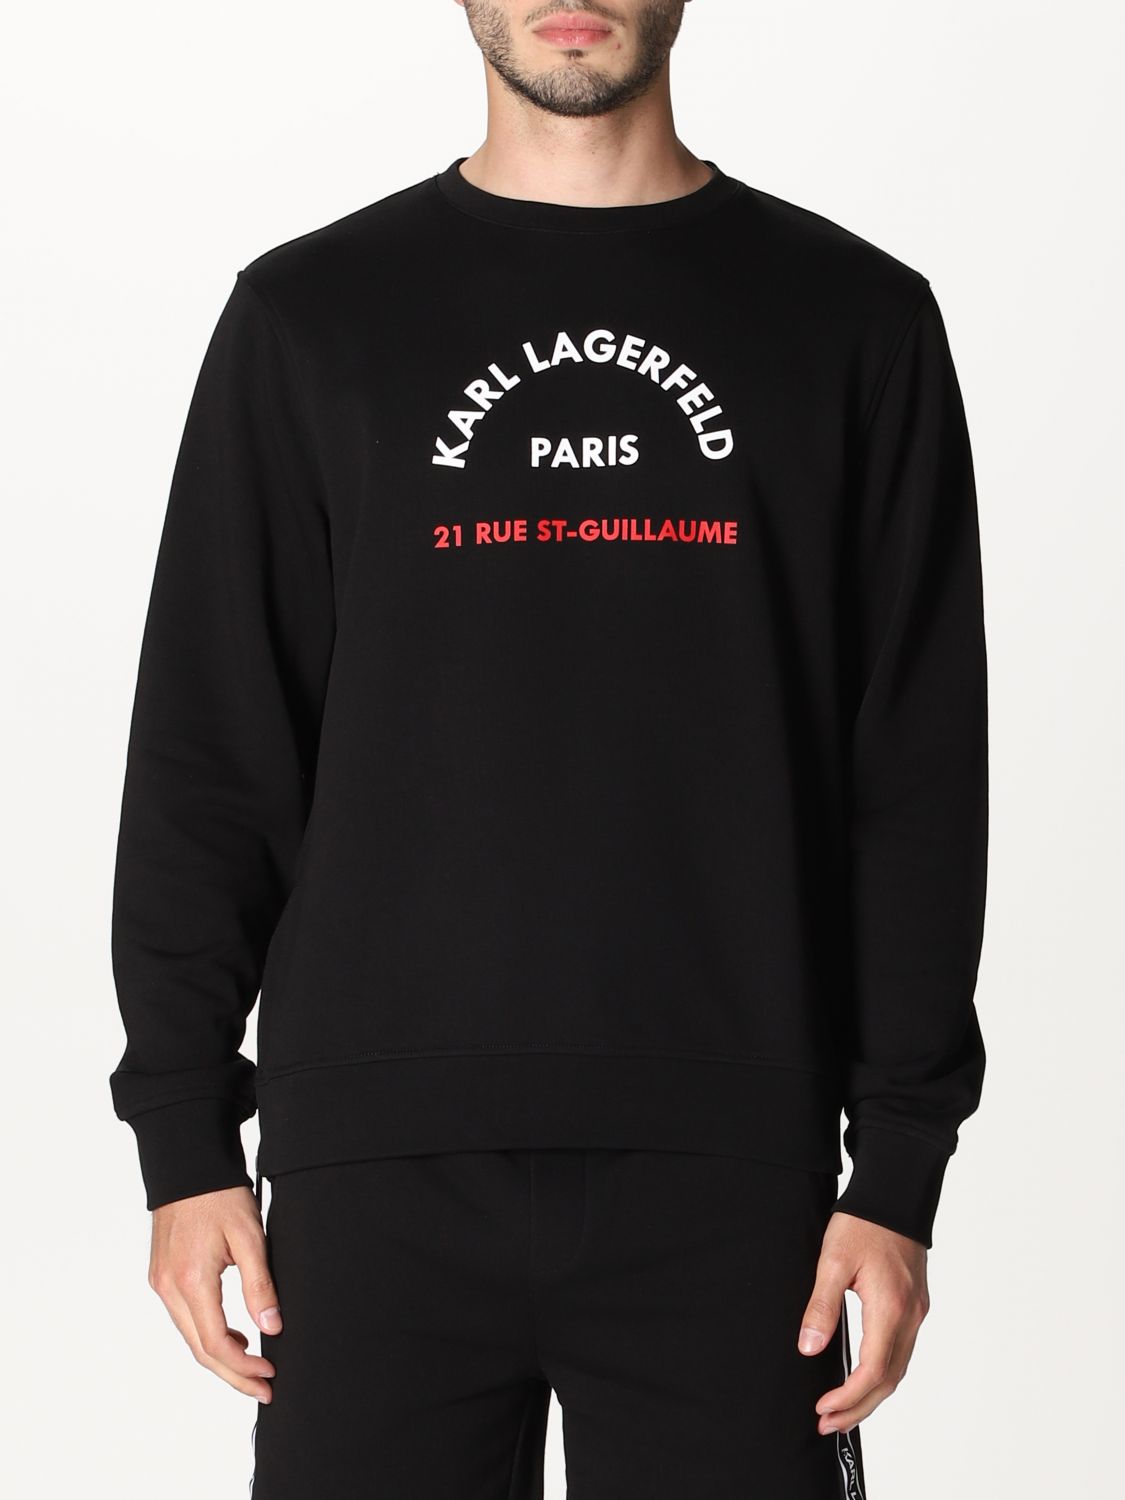 Camisetas Hombre Sudaderas Negro sweatshirt Karl LagerfeldHombre